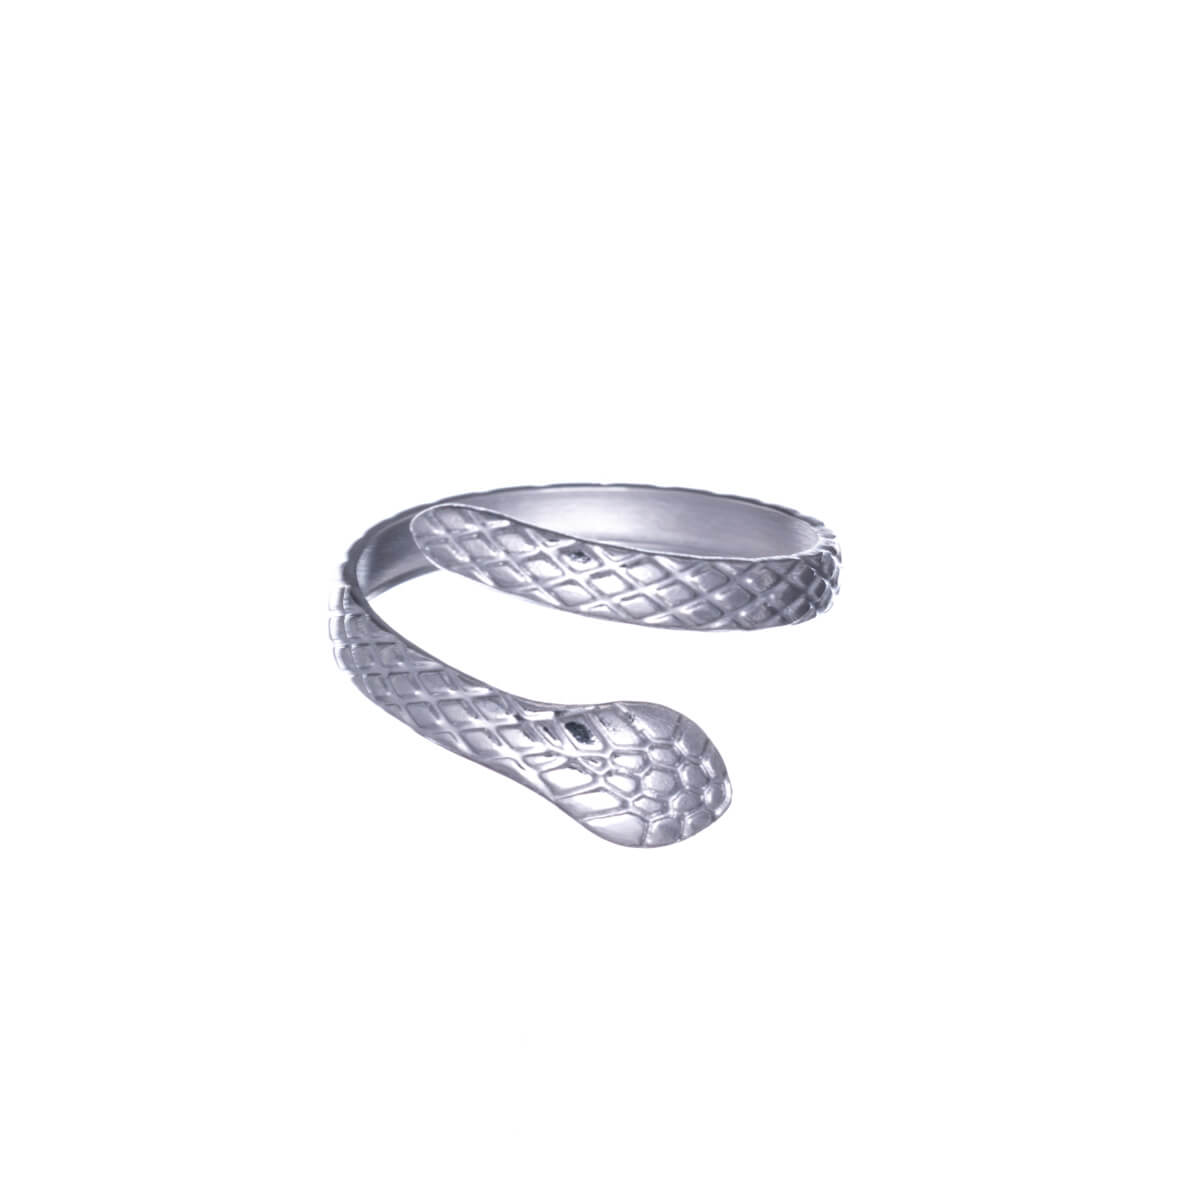 Snake ring single size steel ring (Steel 316L)